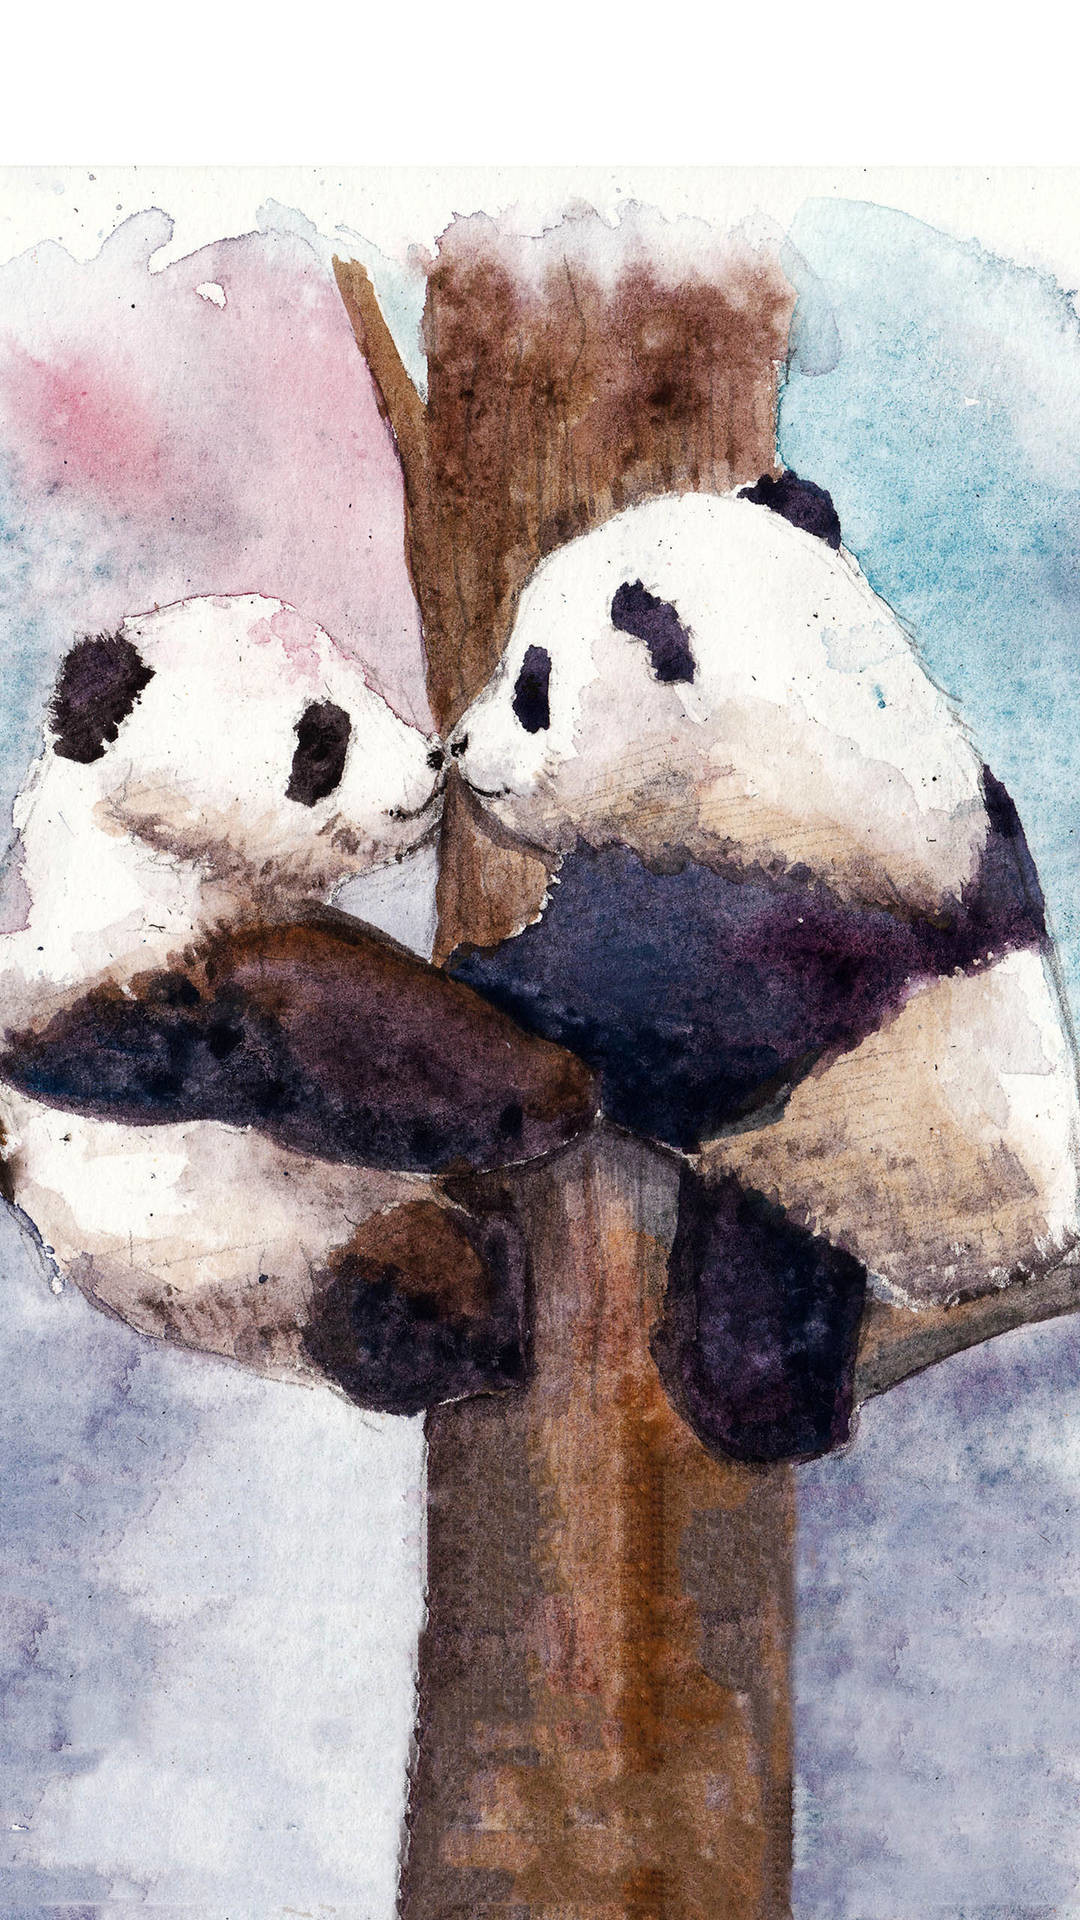 1080x1920 Two giant pandas in climbing trees